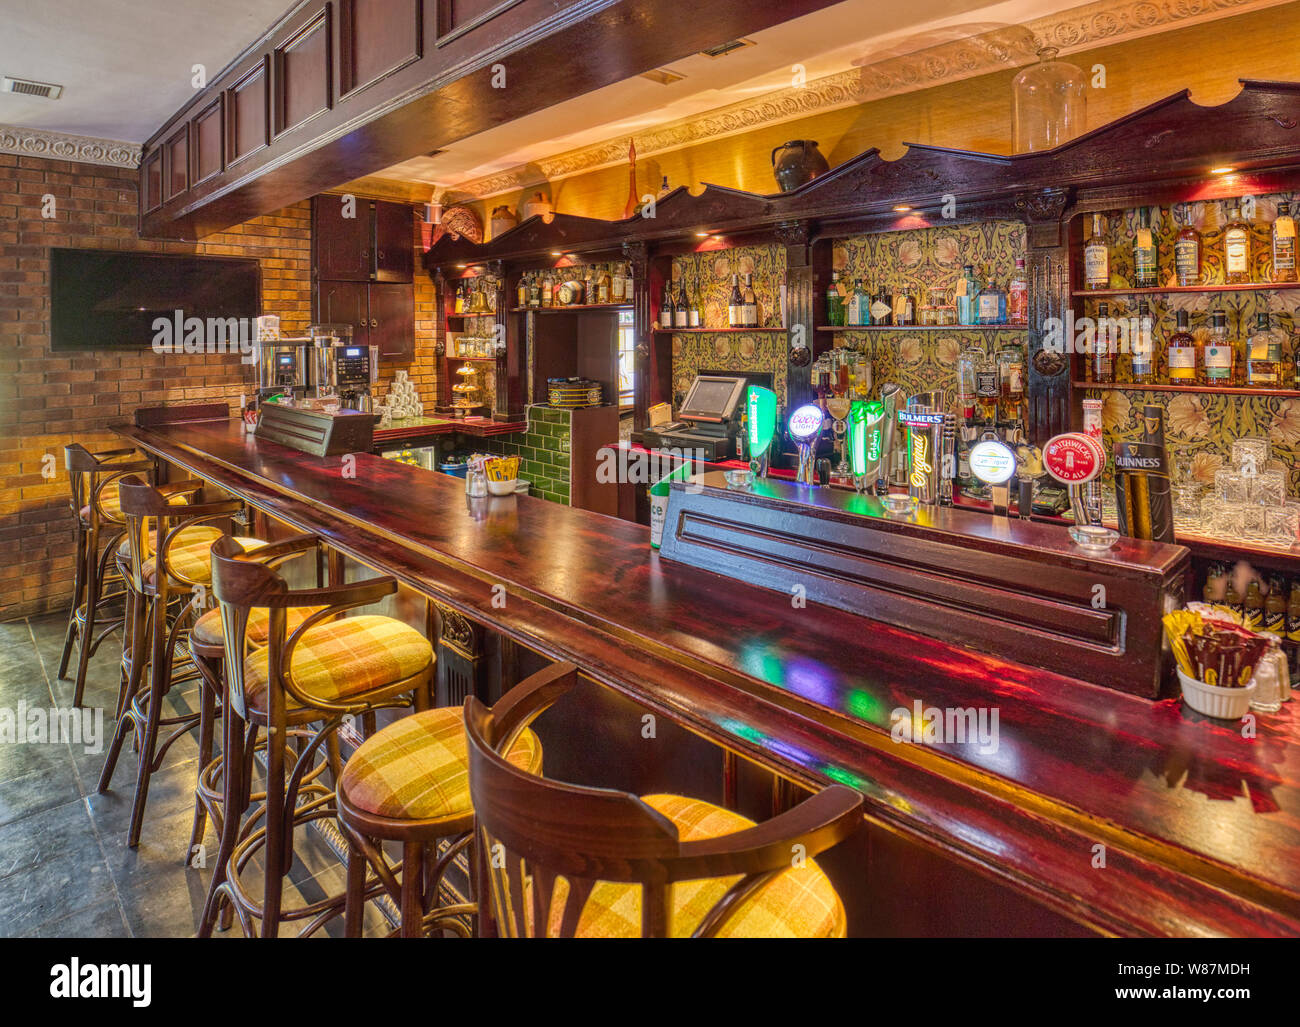 Interior bar area of Corleys Abbey Lodge in Ballintubber County Mayo Irelnad Stock Photo